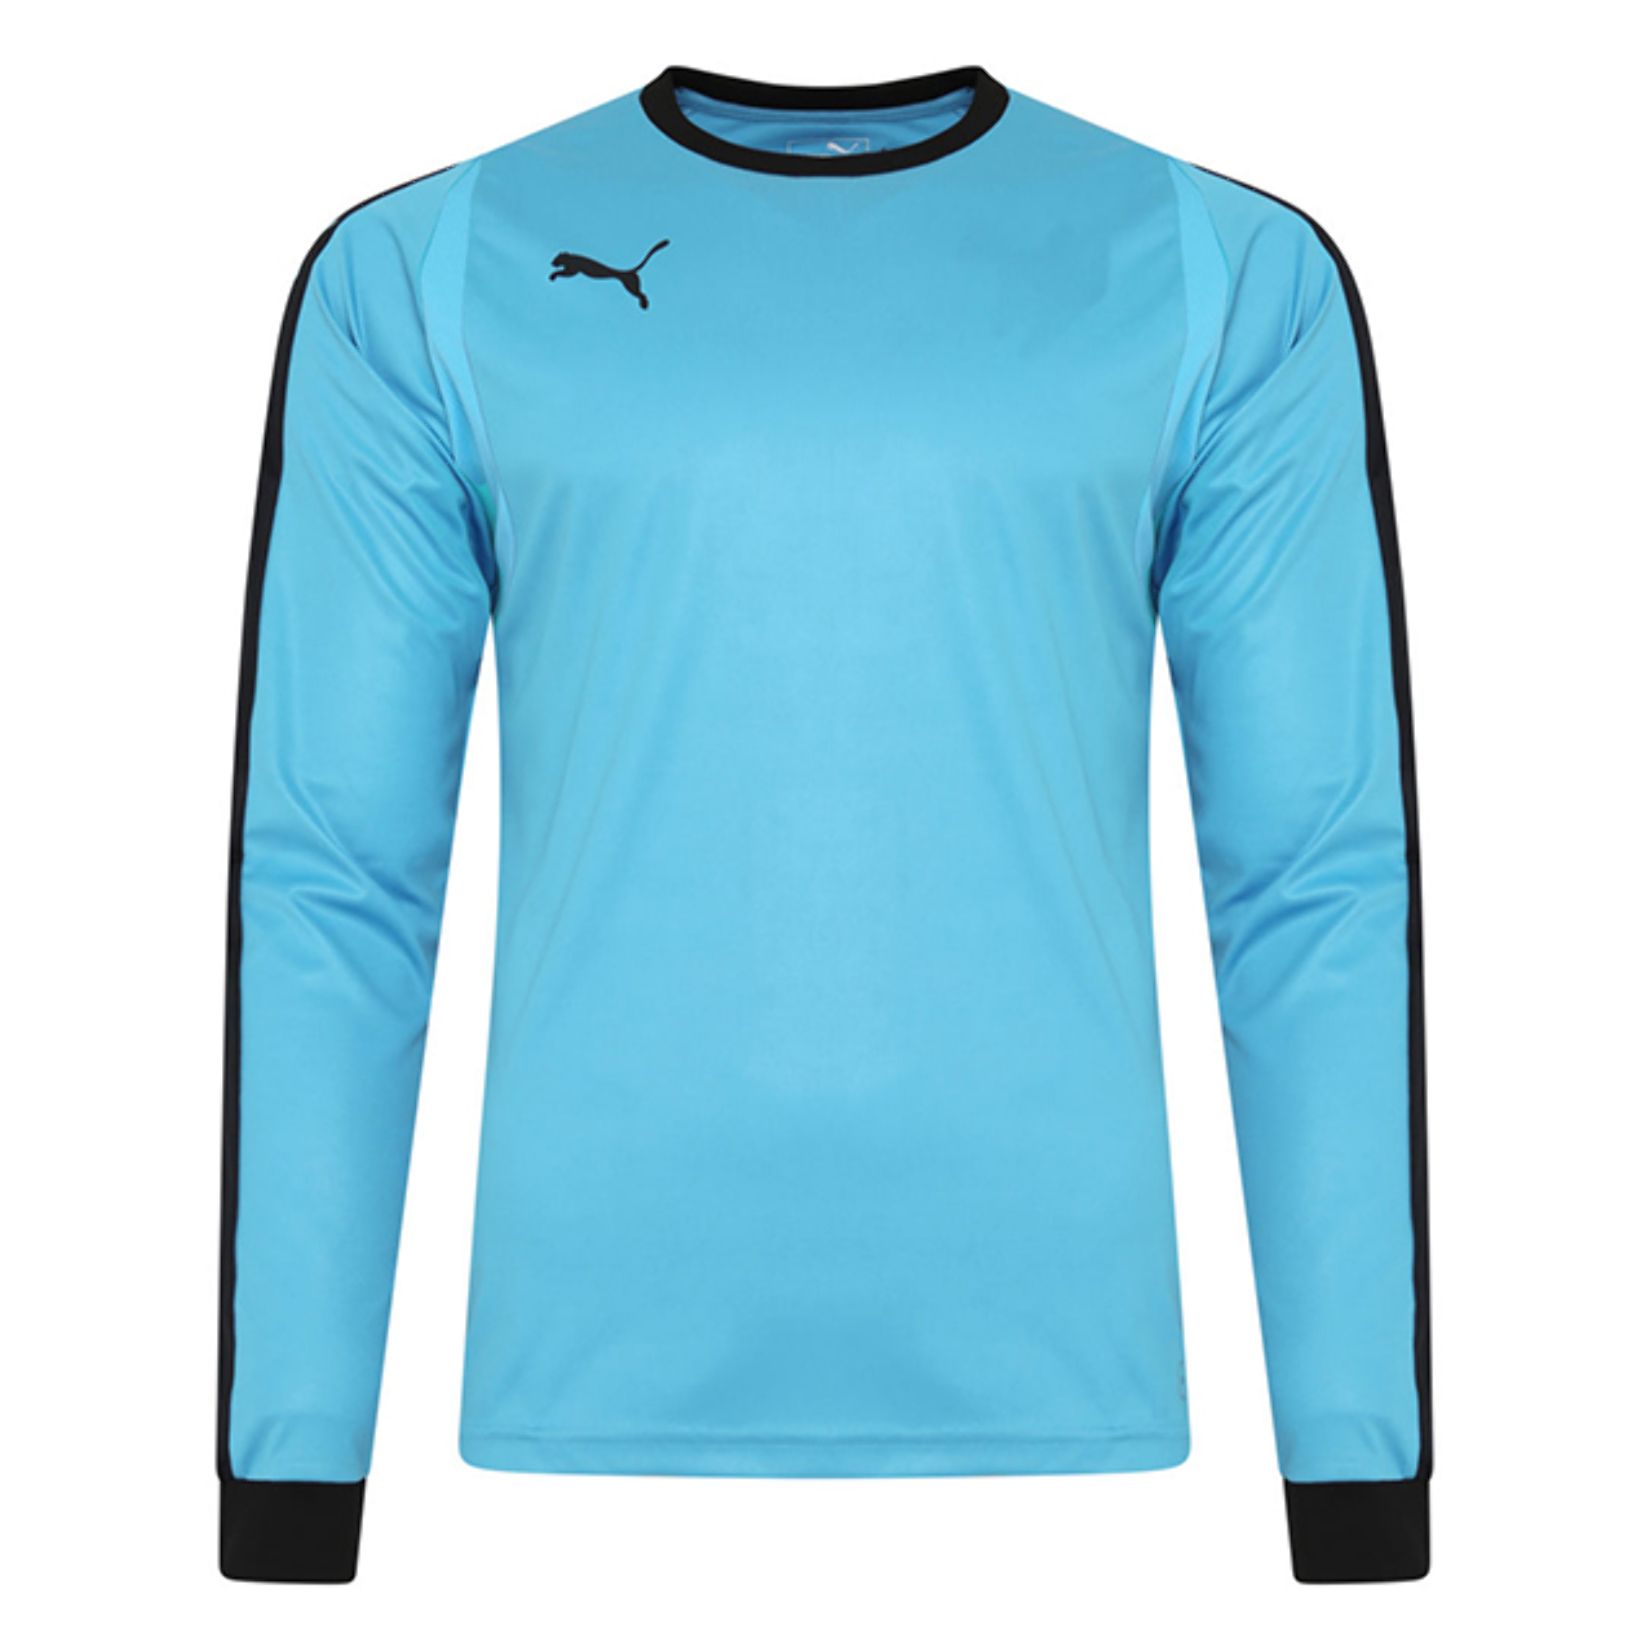 Puma Liga Goalkeeper Shirt - Kitlocker.com